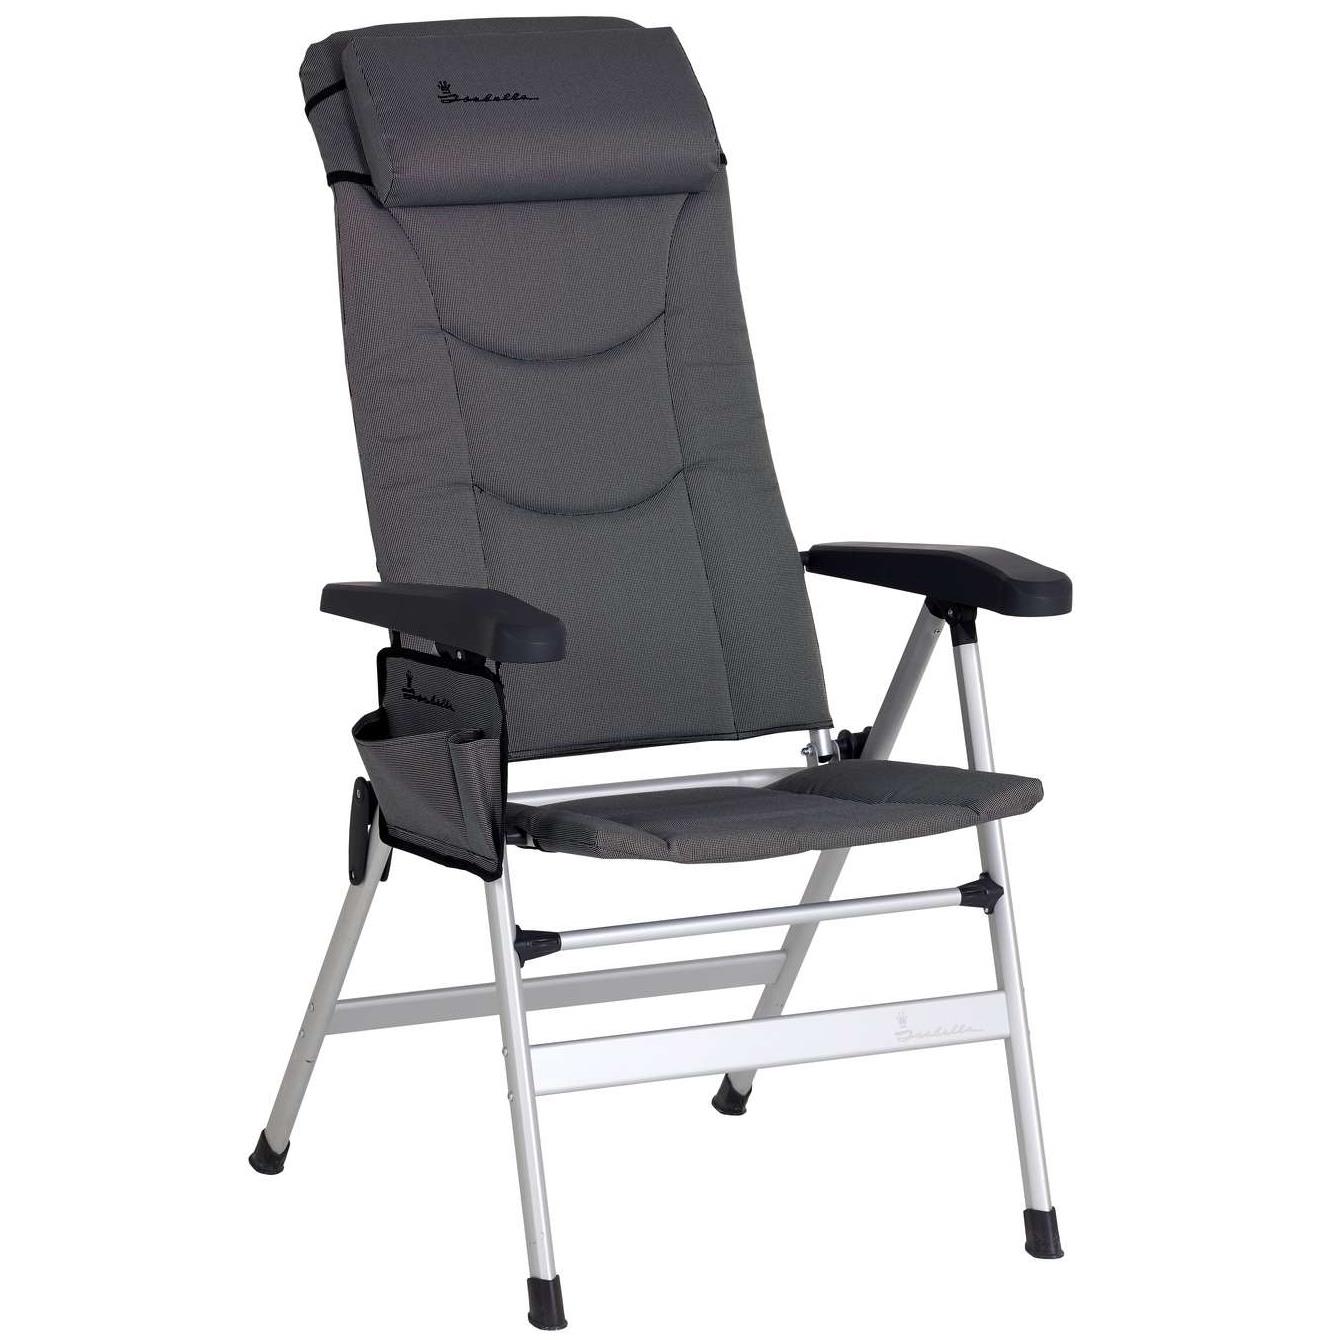 Isabella THOR CHAIR & FOOTREST Package Deal DARK GREY Lightweight Caravan Chair 